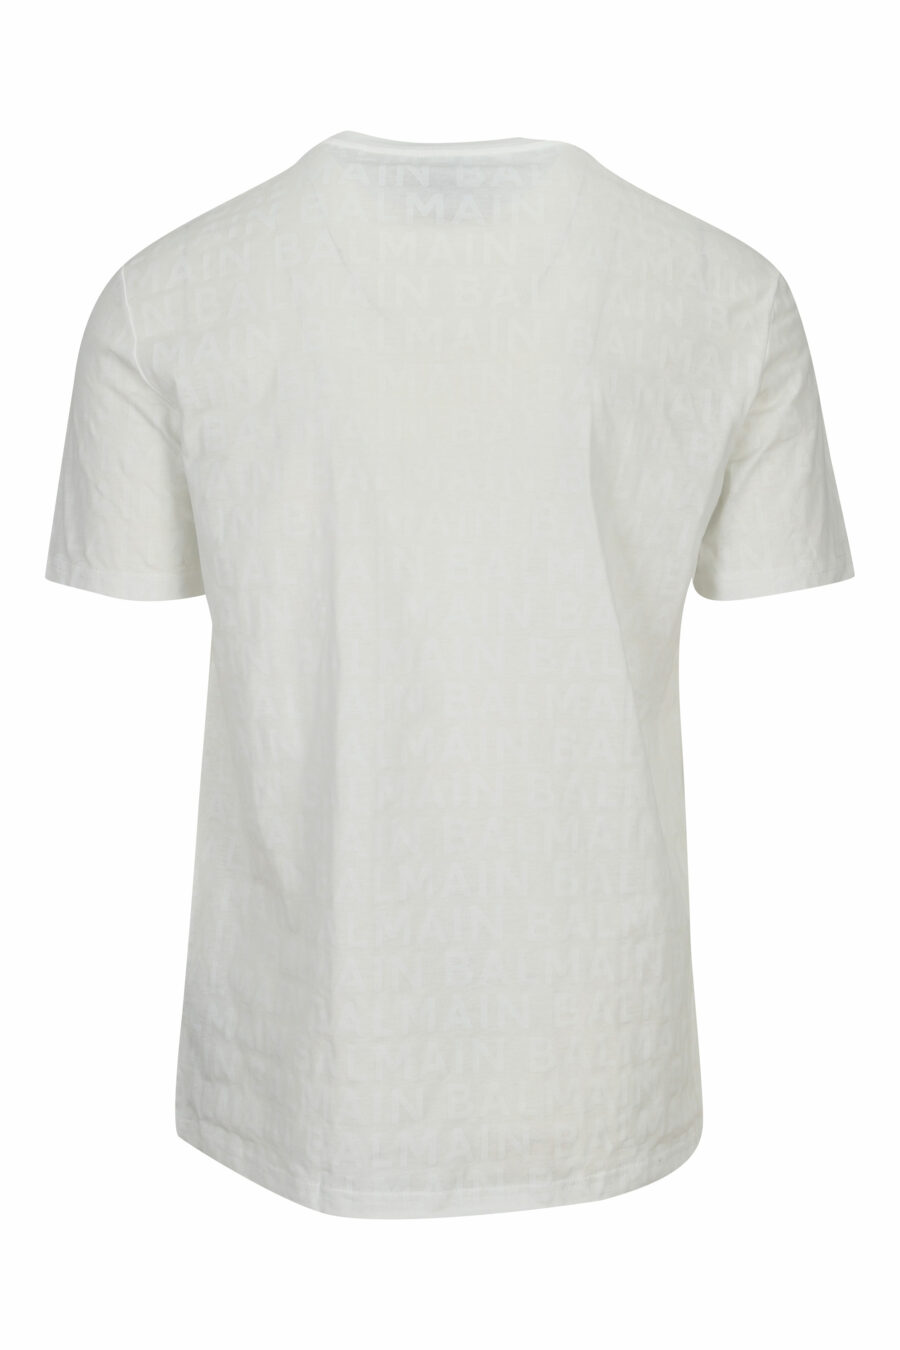 Camiseta blanca con monograma monocromático - 8032674525390 1